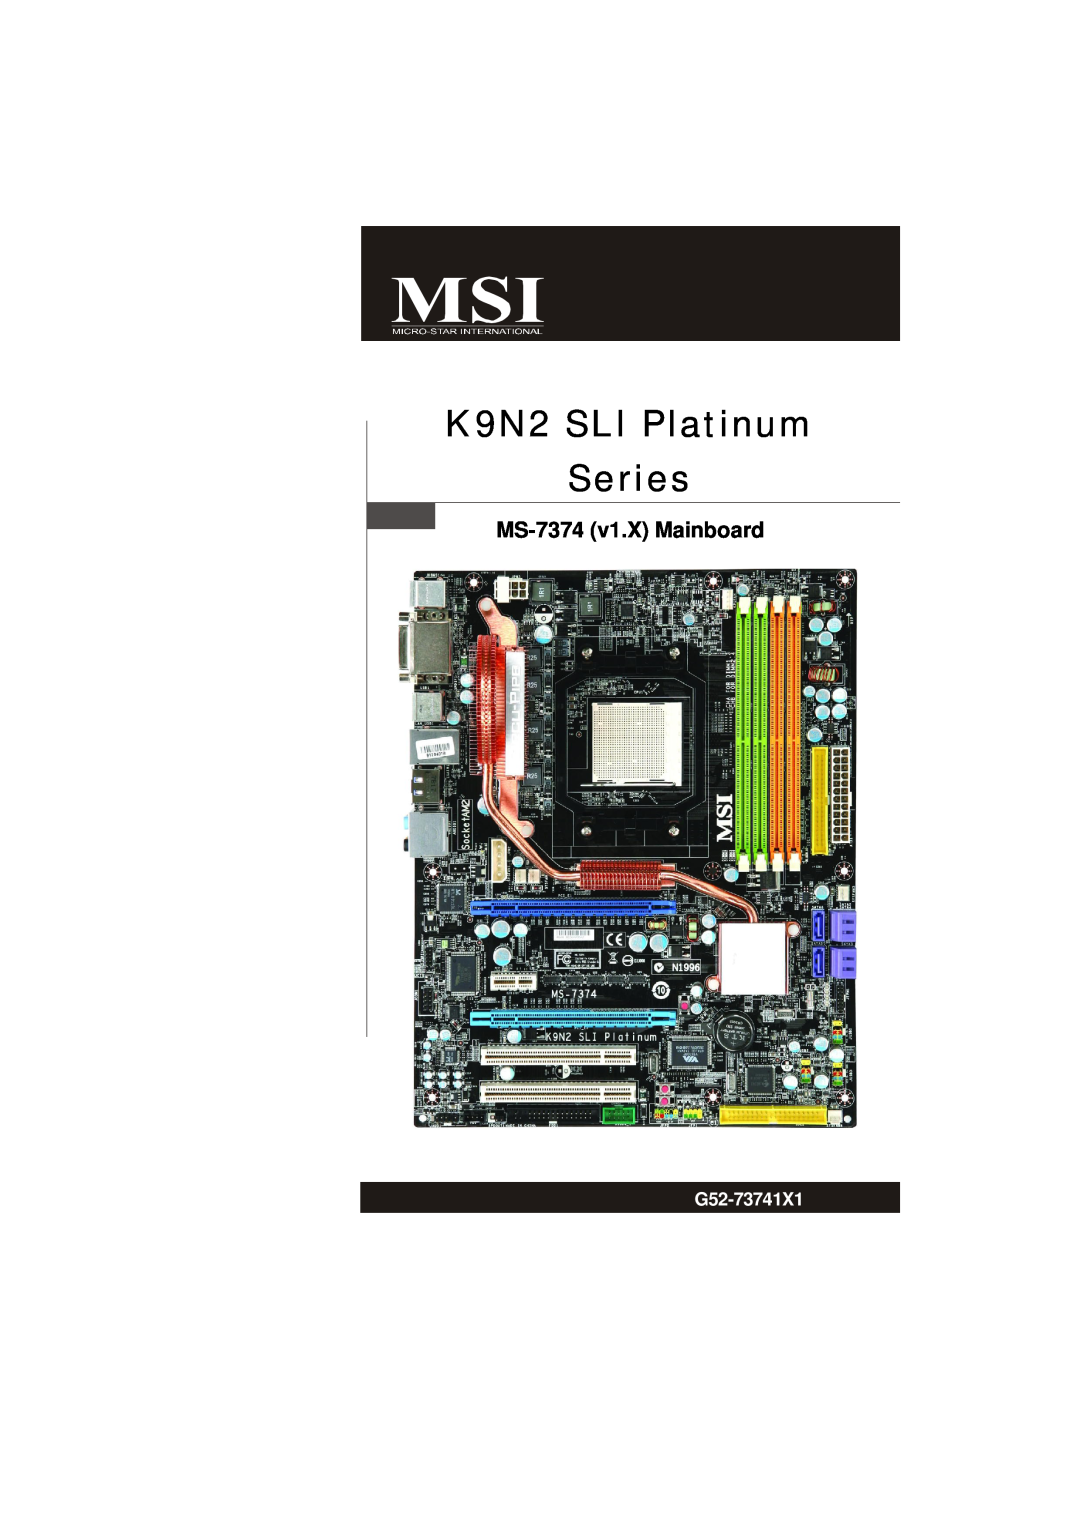 Nvidia manual MS-7374 v1.X Mainboard, K9N2 SLI Platinum Series, G52-73741X1 